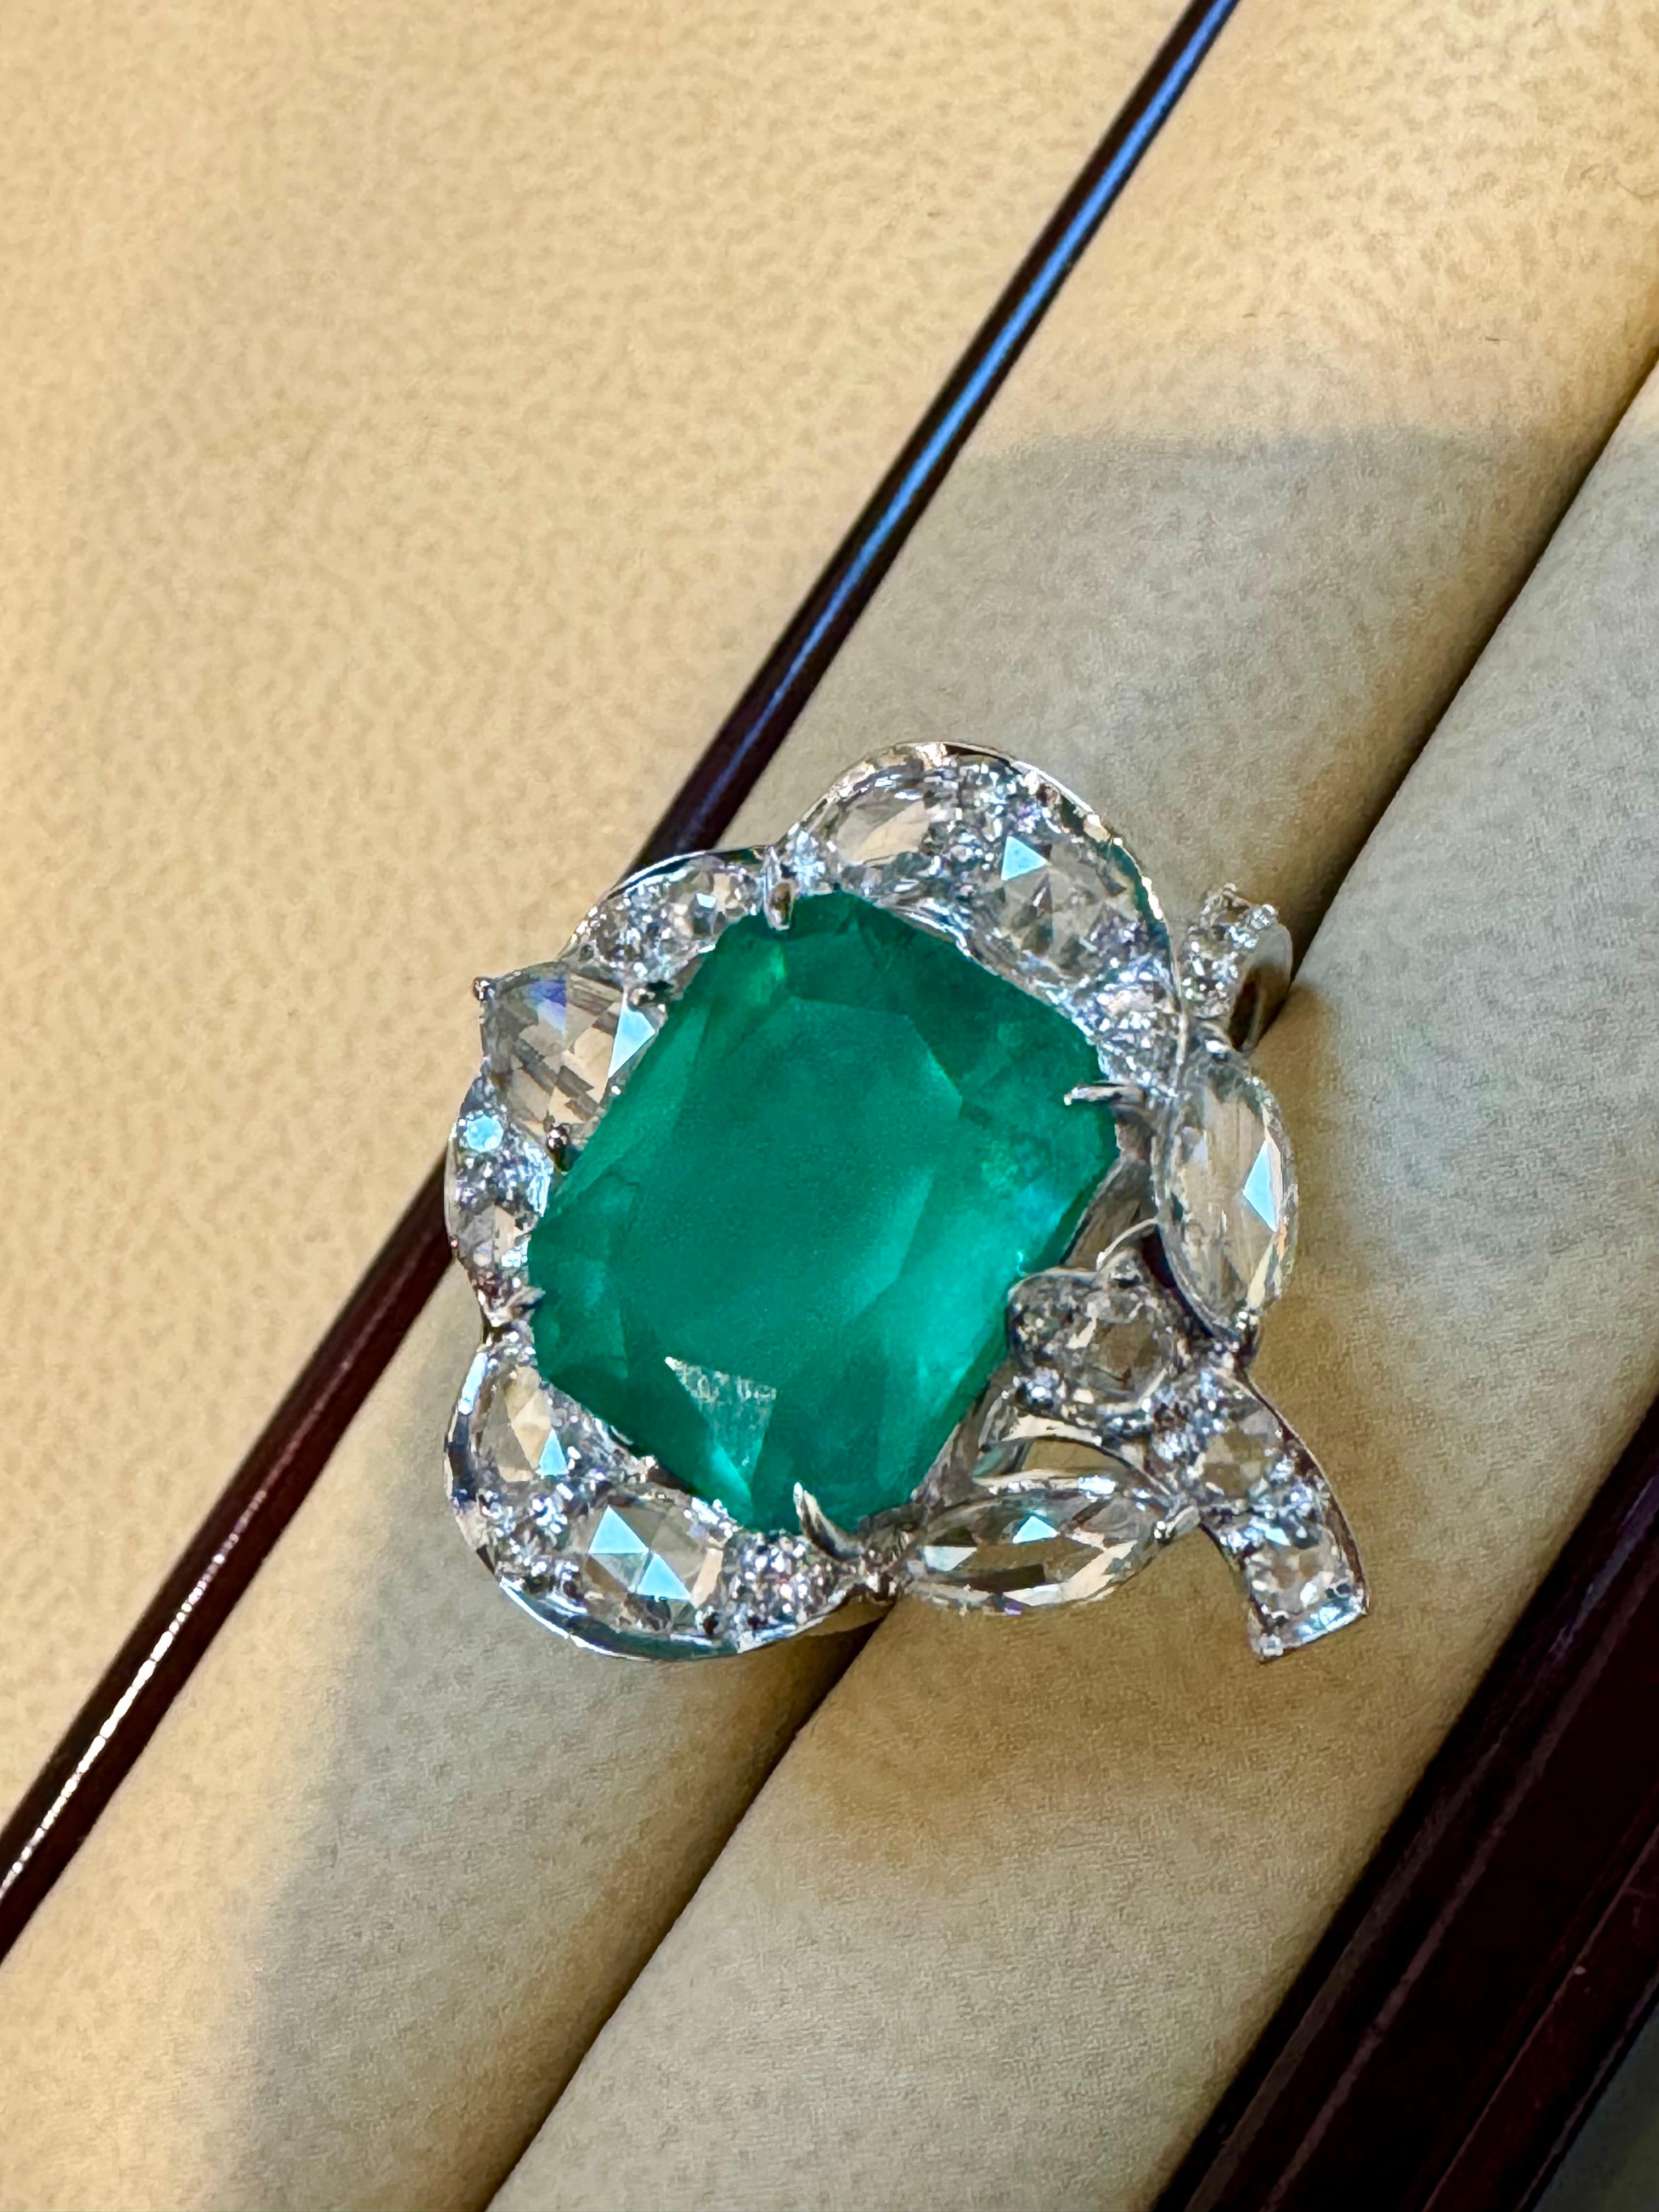 7 Ct Finest Zambian Emerald Cut Emerald & 1.5Ct Diamond Ring, 18 Kt Gold Size 9 For Sale 3